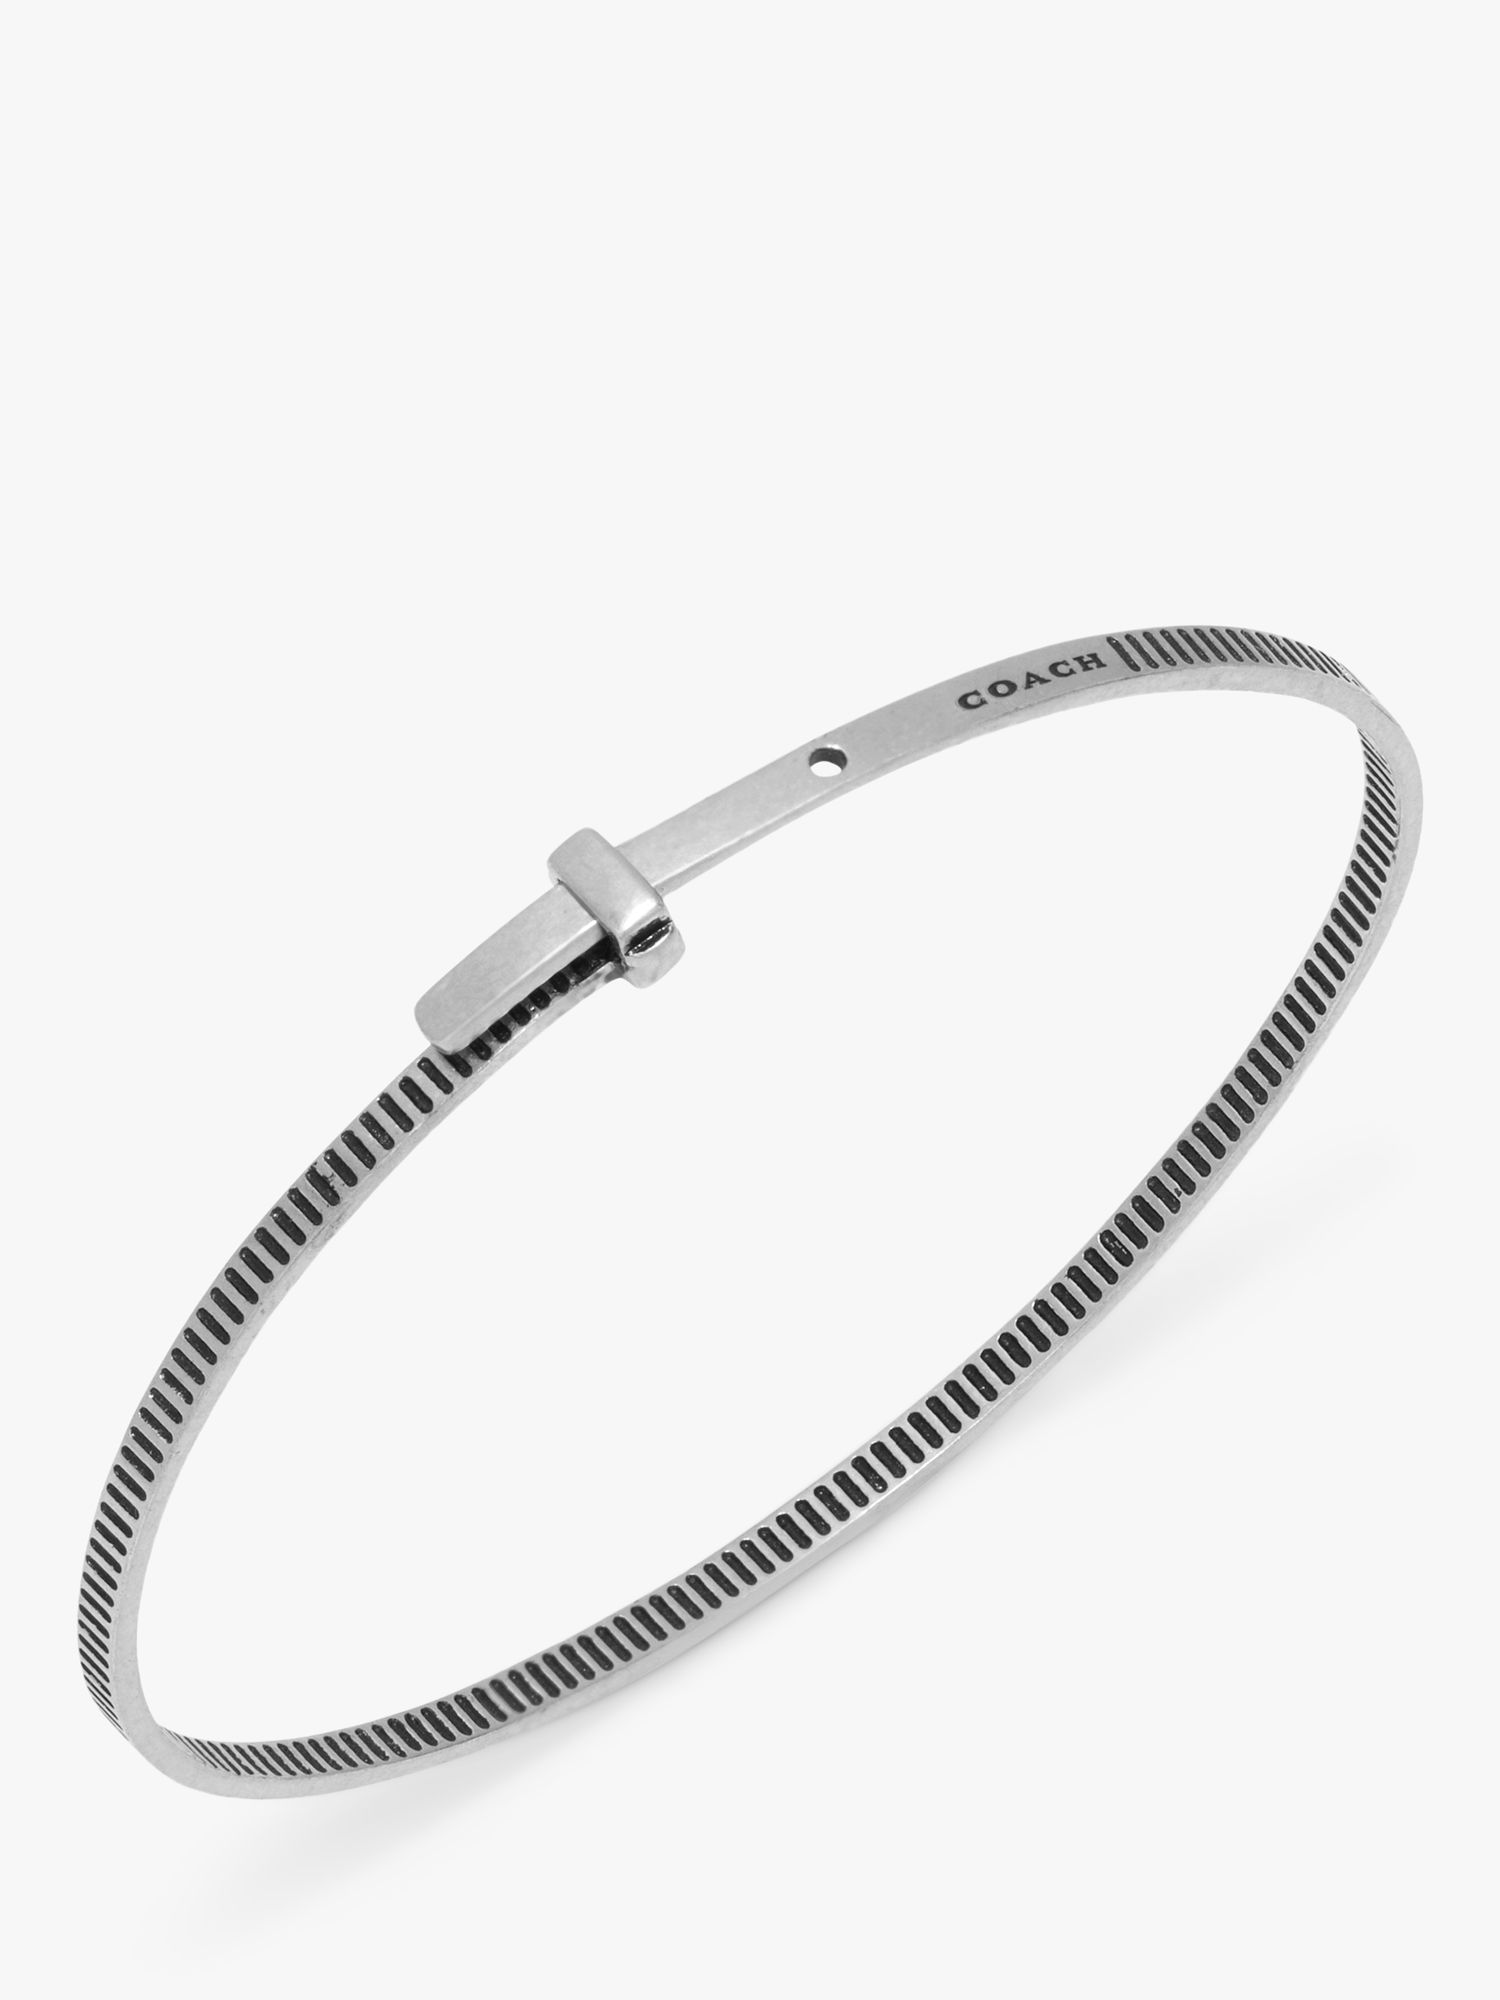 Buy Coach Zip Tie Cuff Bracelet, Silver Online at johnlewis.com